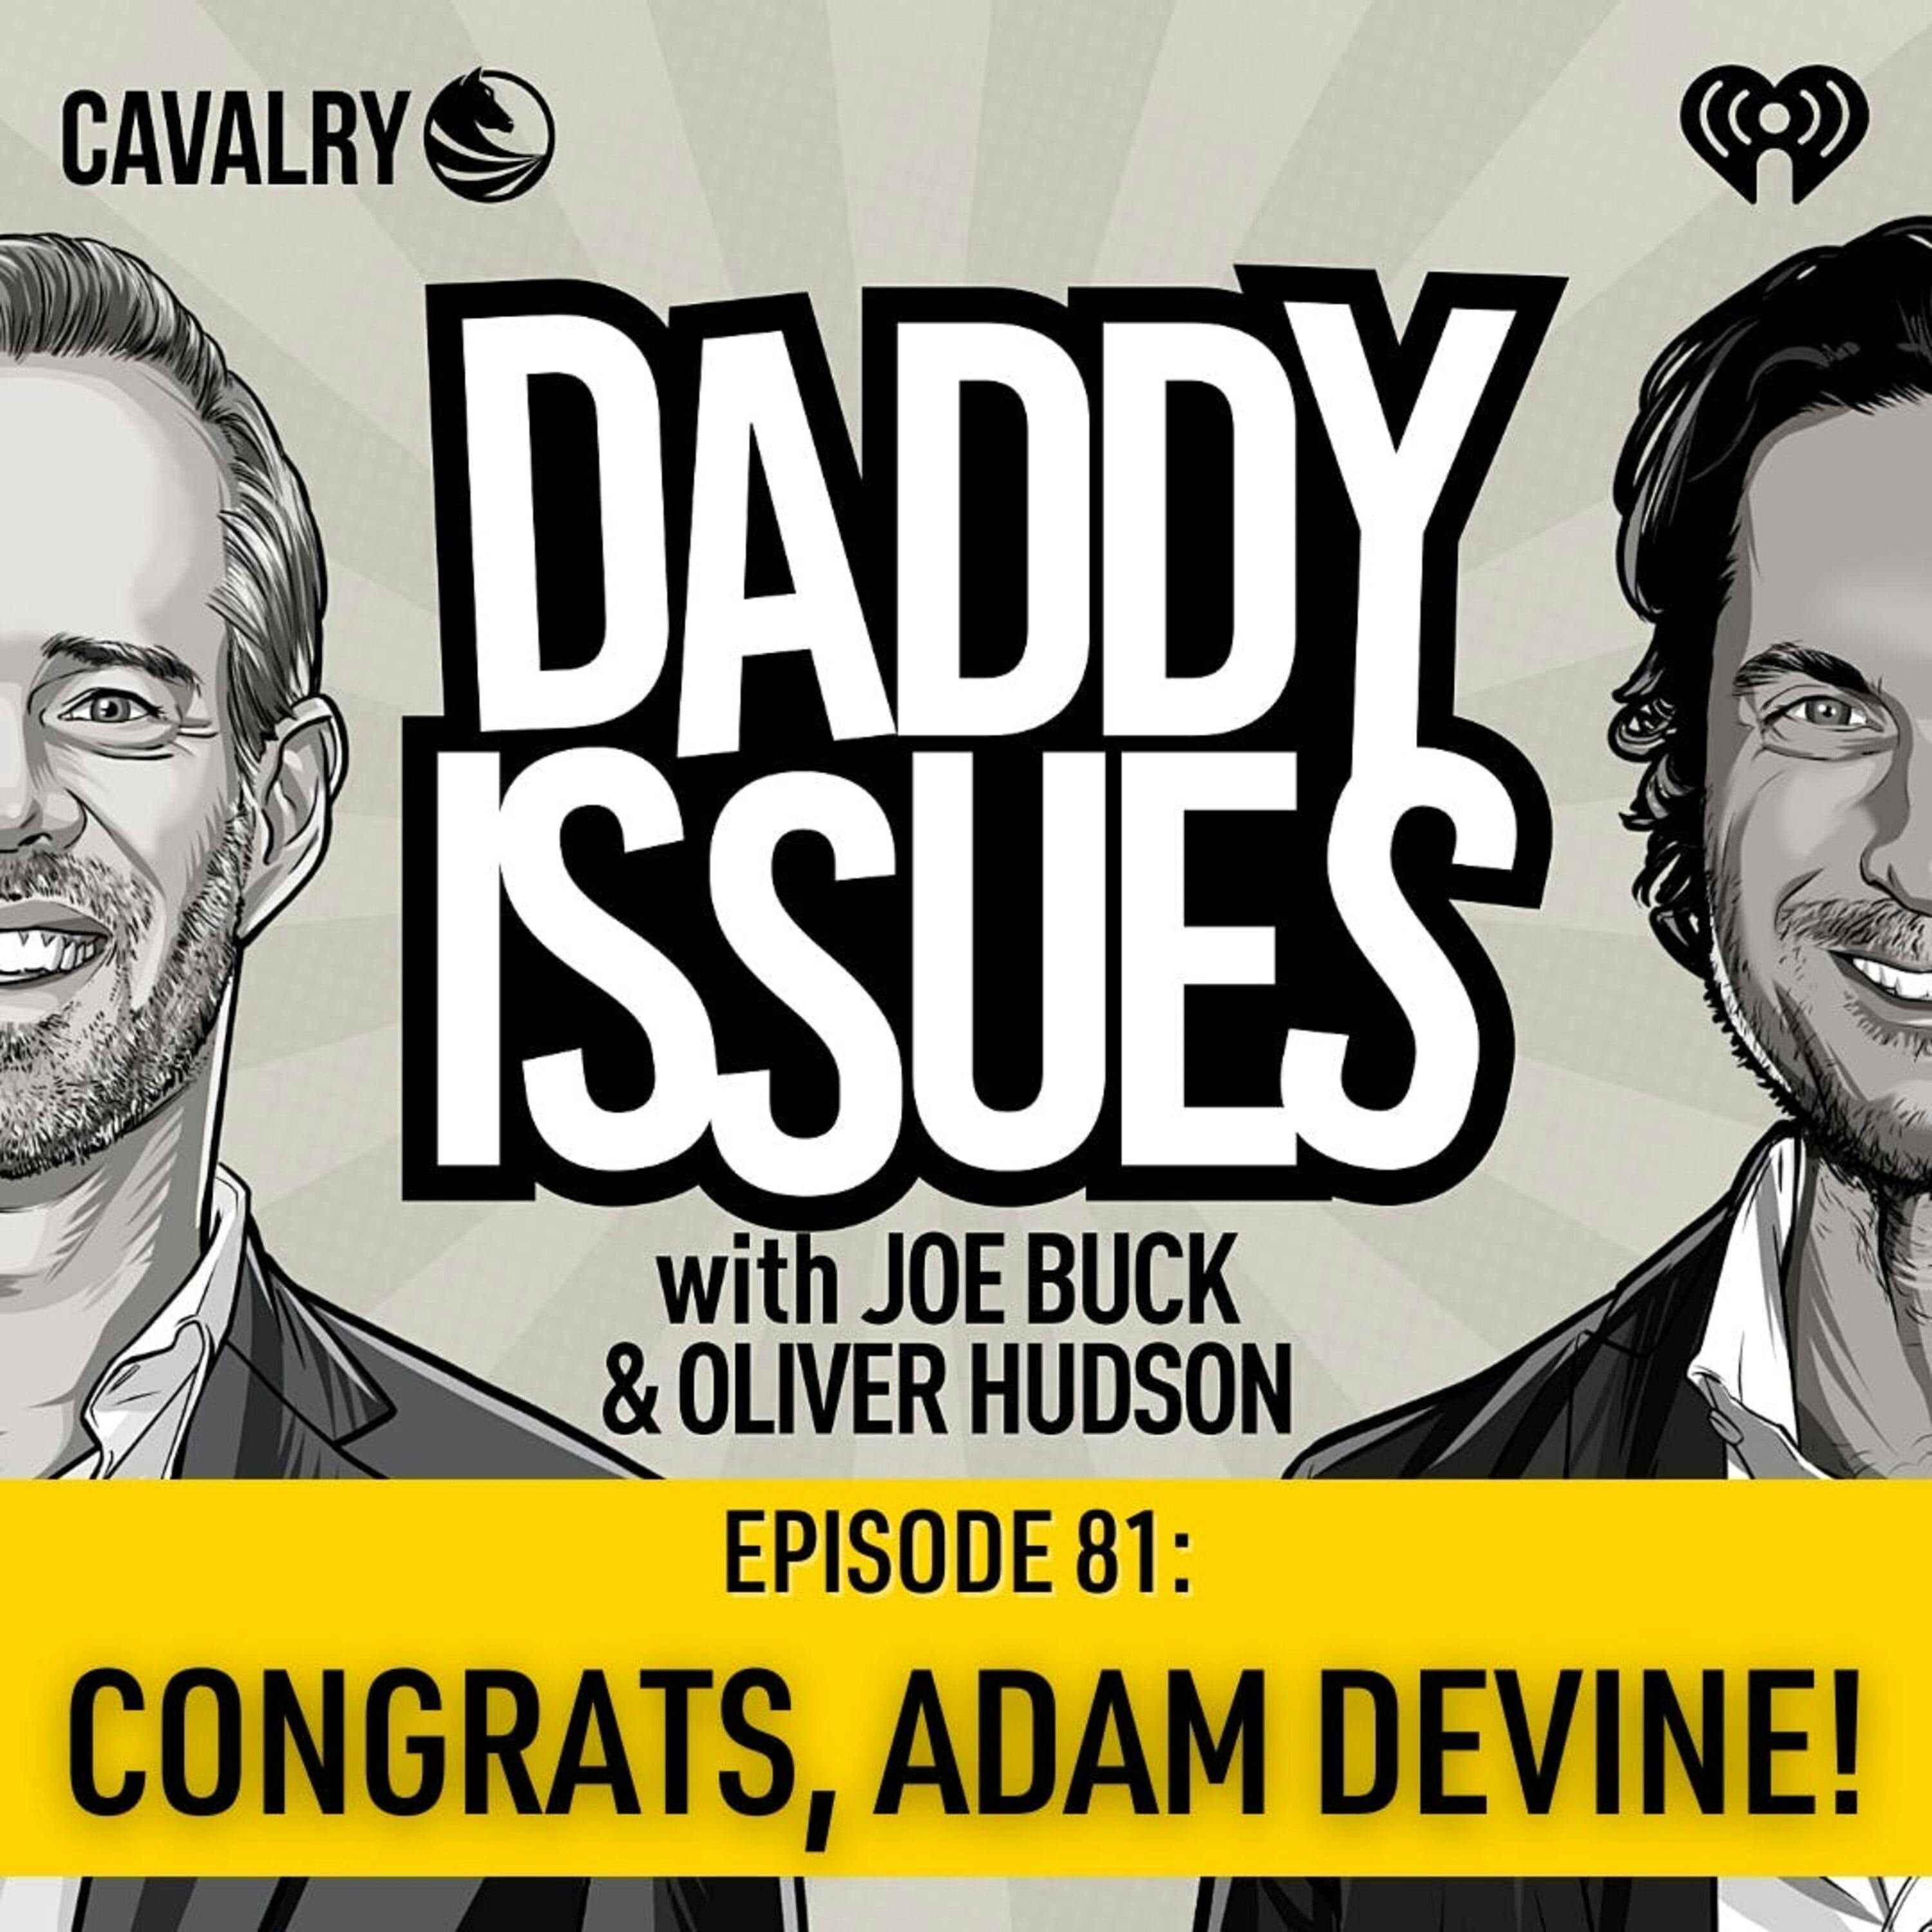 Congrats, Adam DeVine!